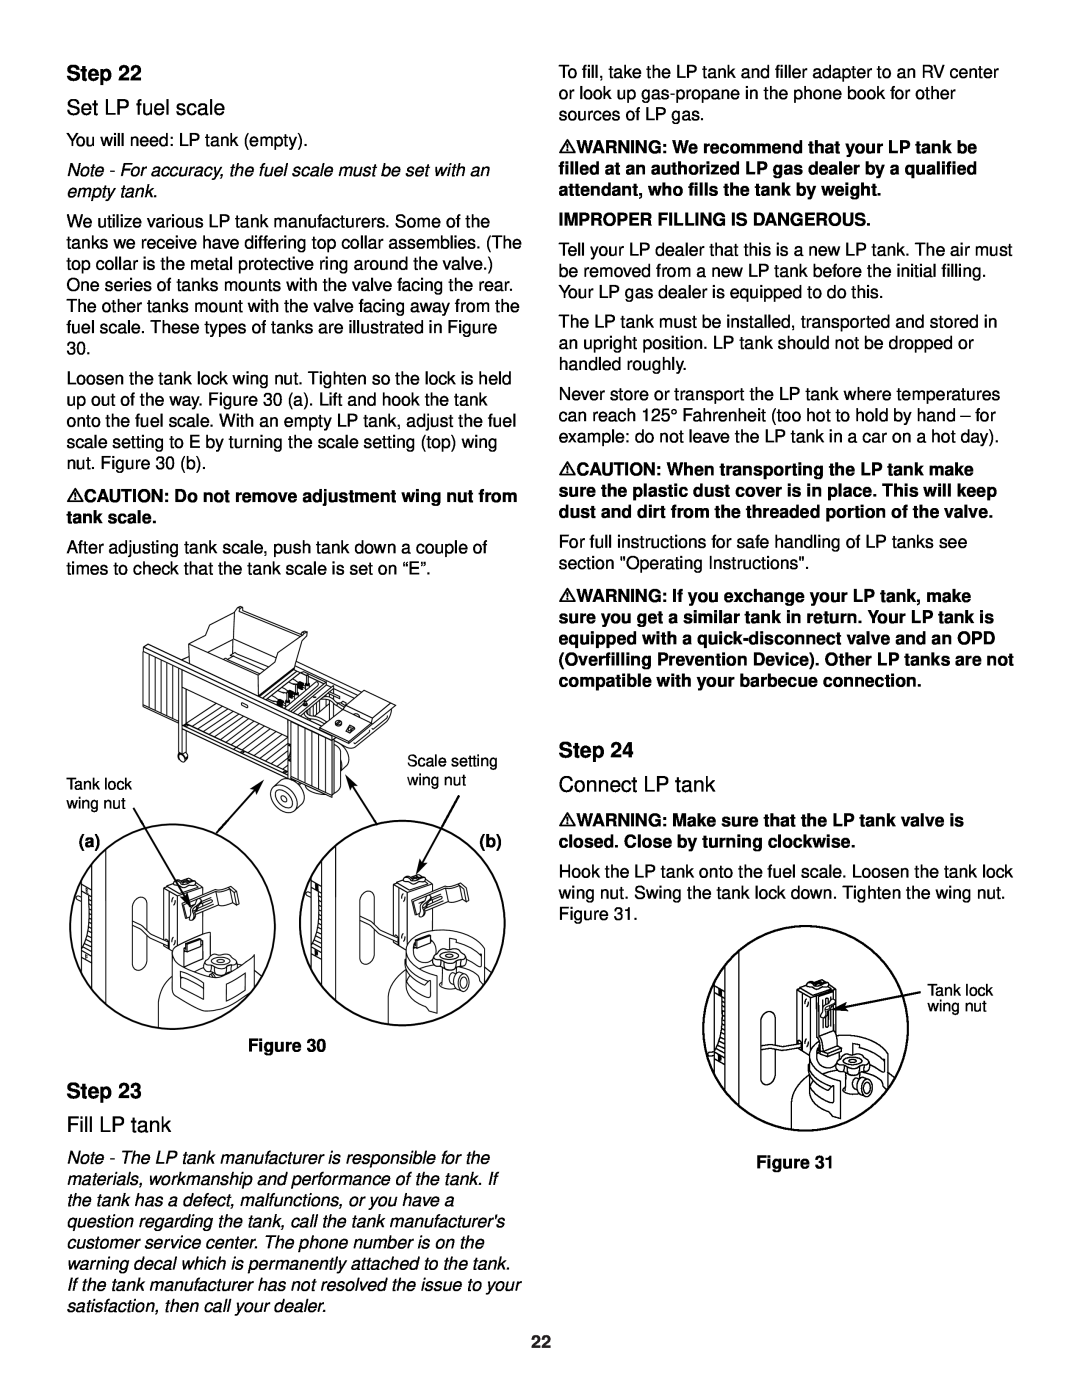 Weber 3400 Series owner manual Step, Improper Filling Is Dangerous, mWARNING Make sure that the LP tank valve is 